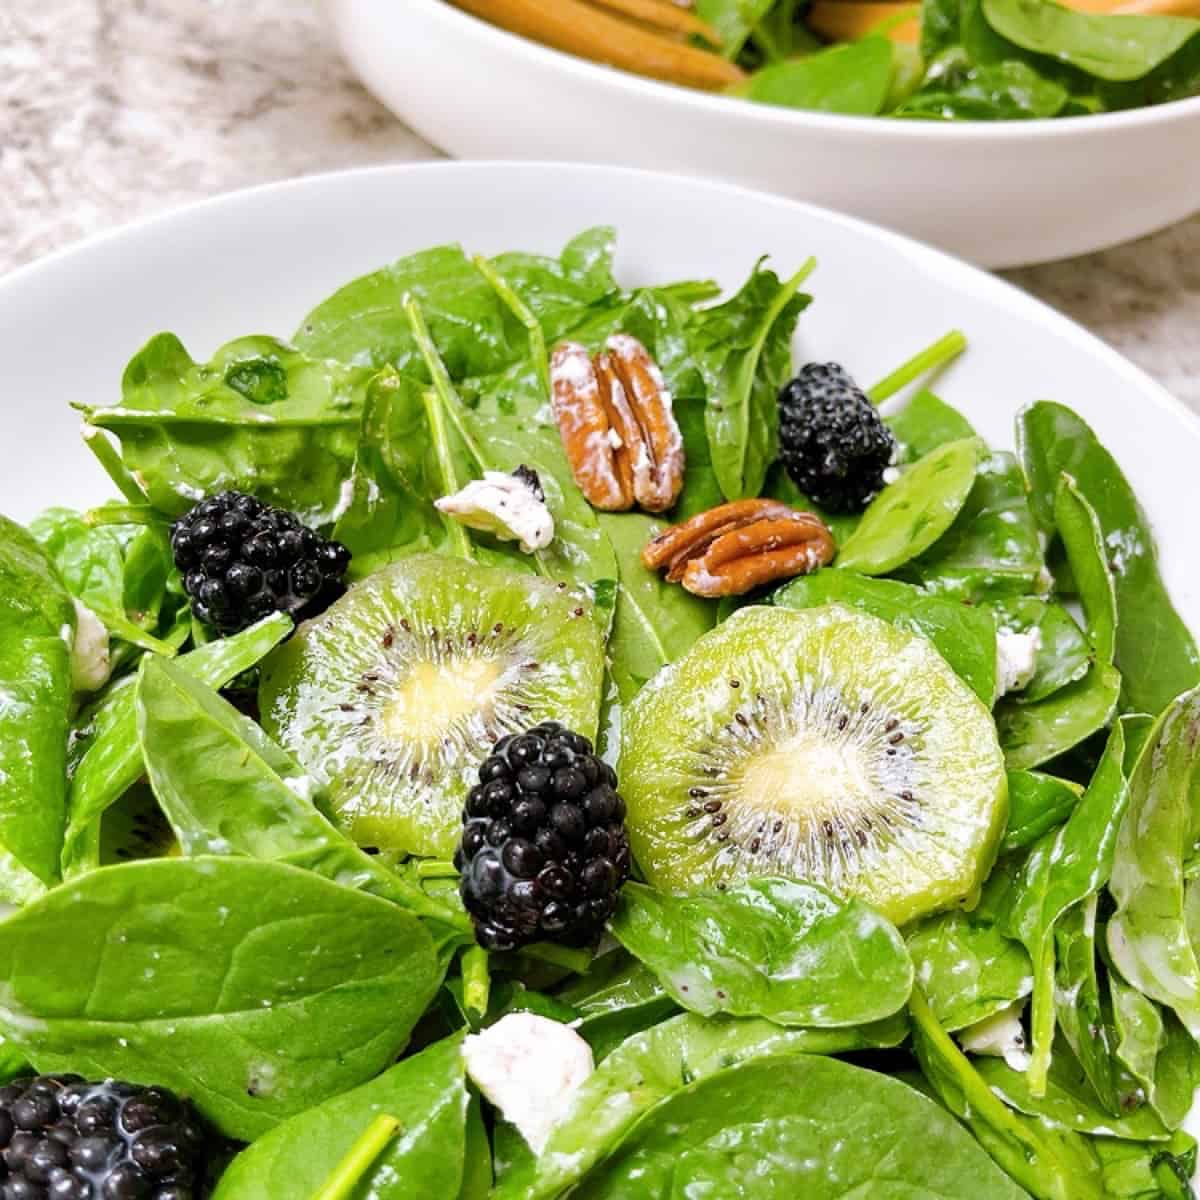 Side salad kiwi salad with blackberries and pecans tossed